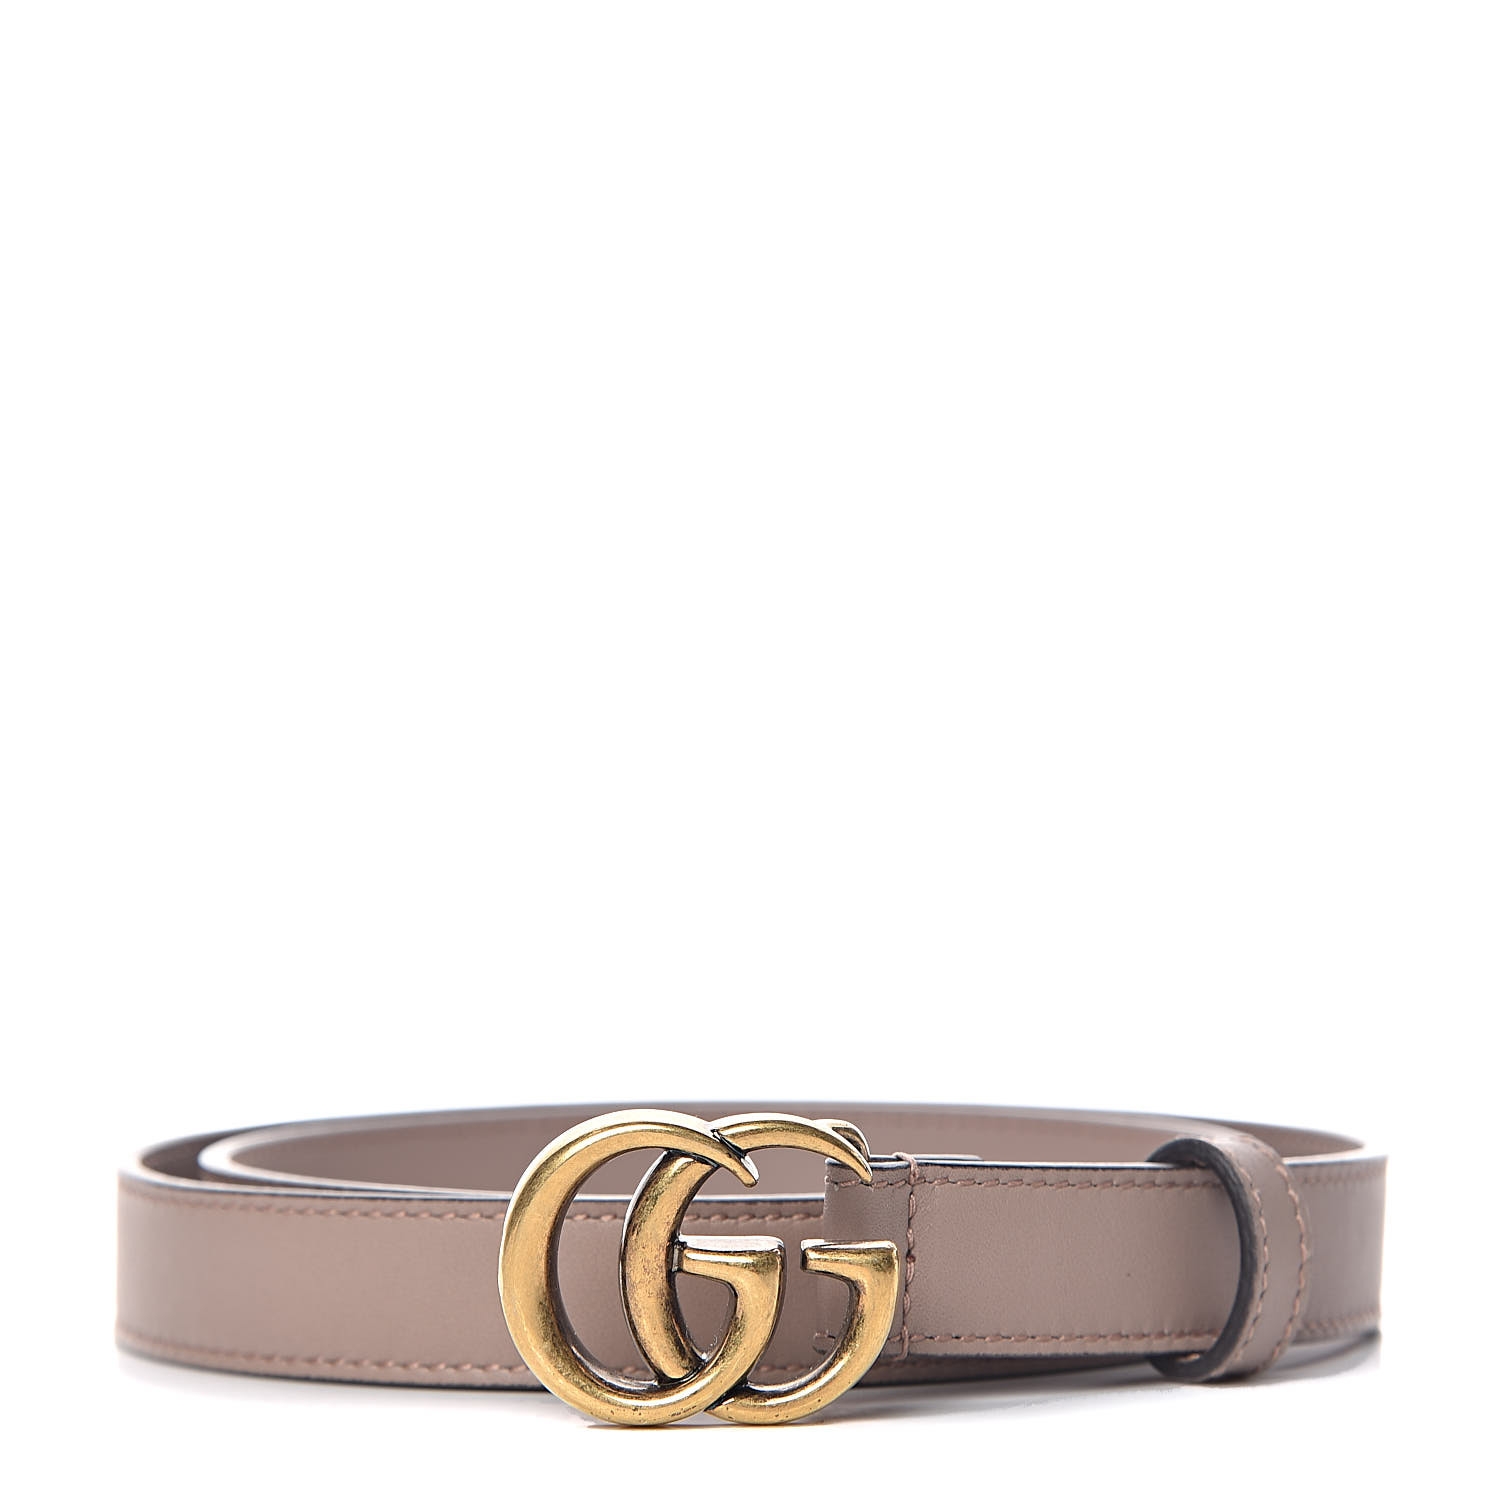 rose gold gucci belt